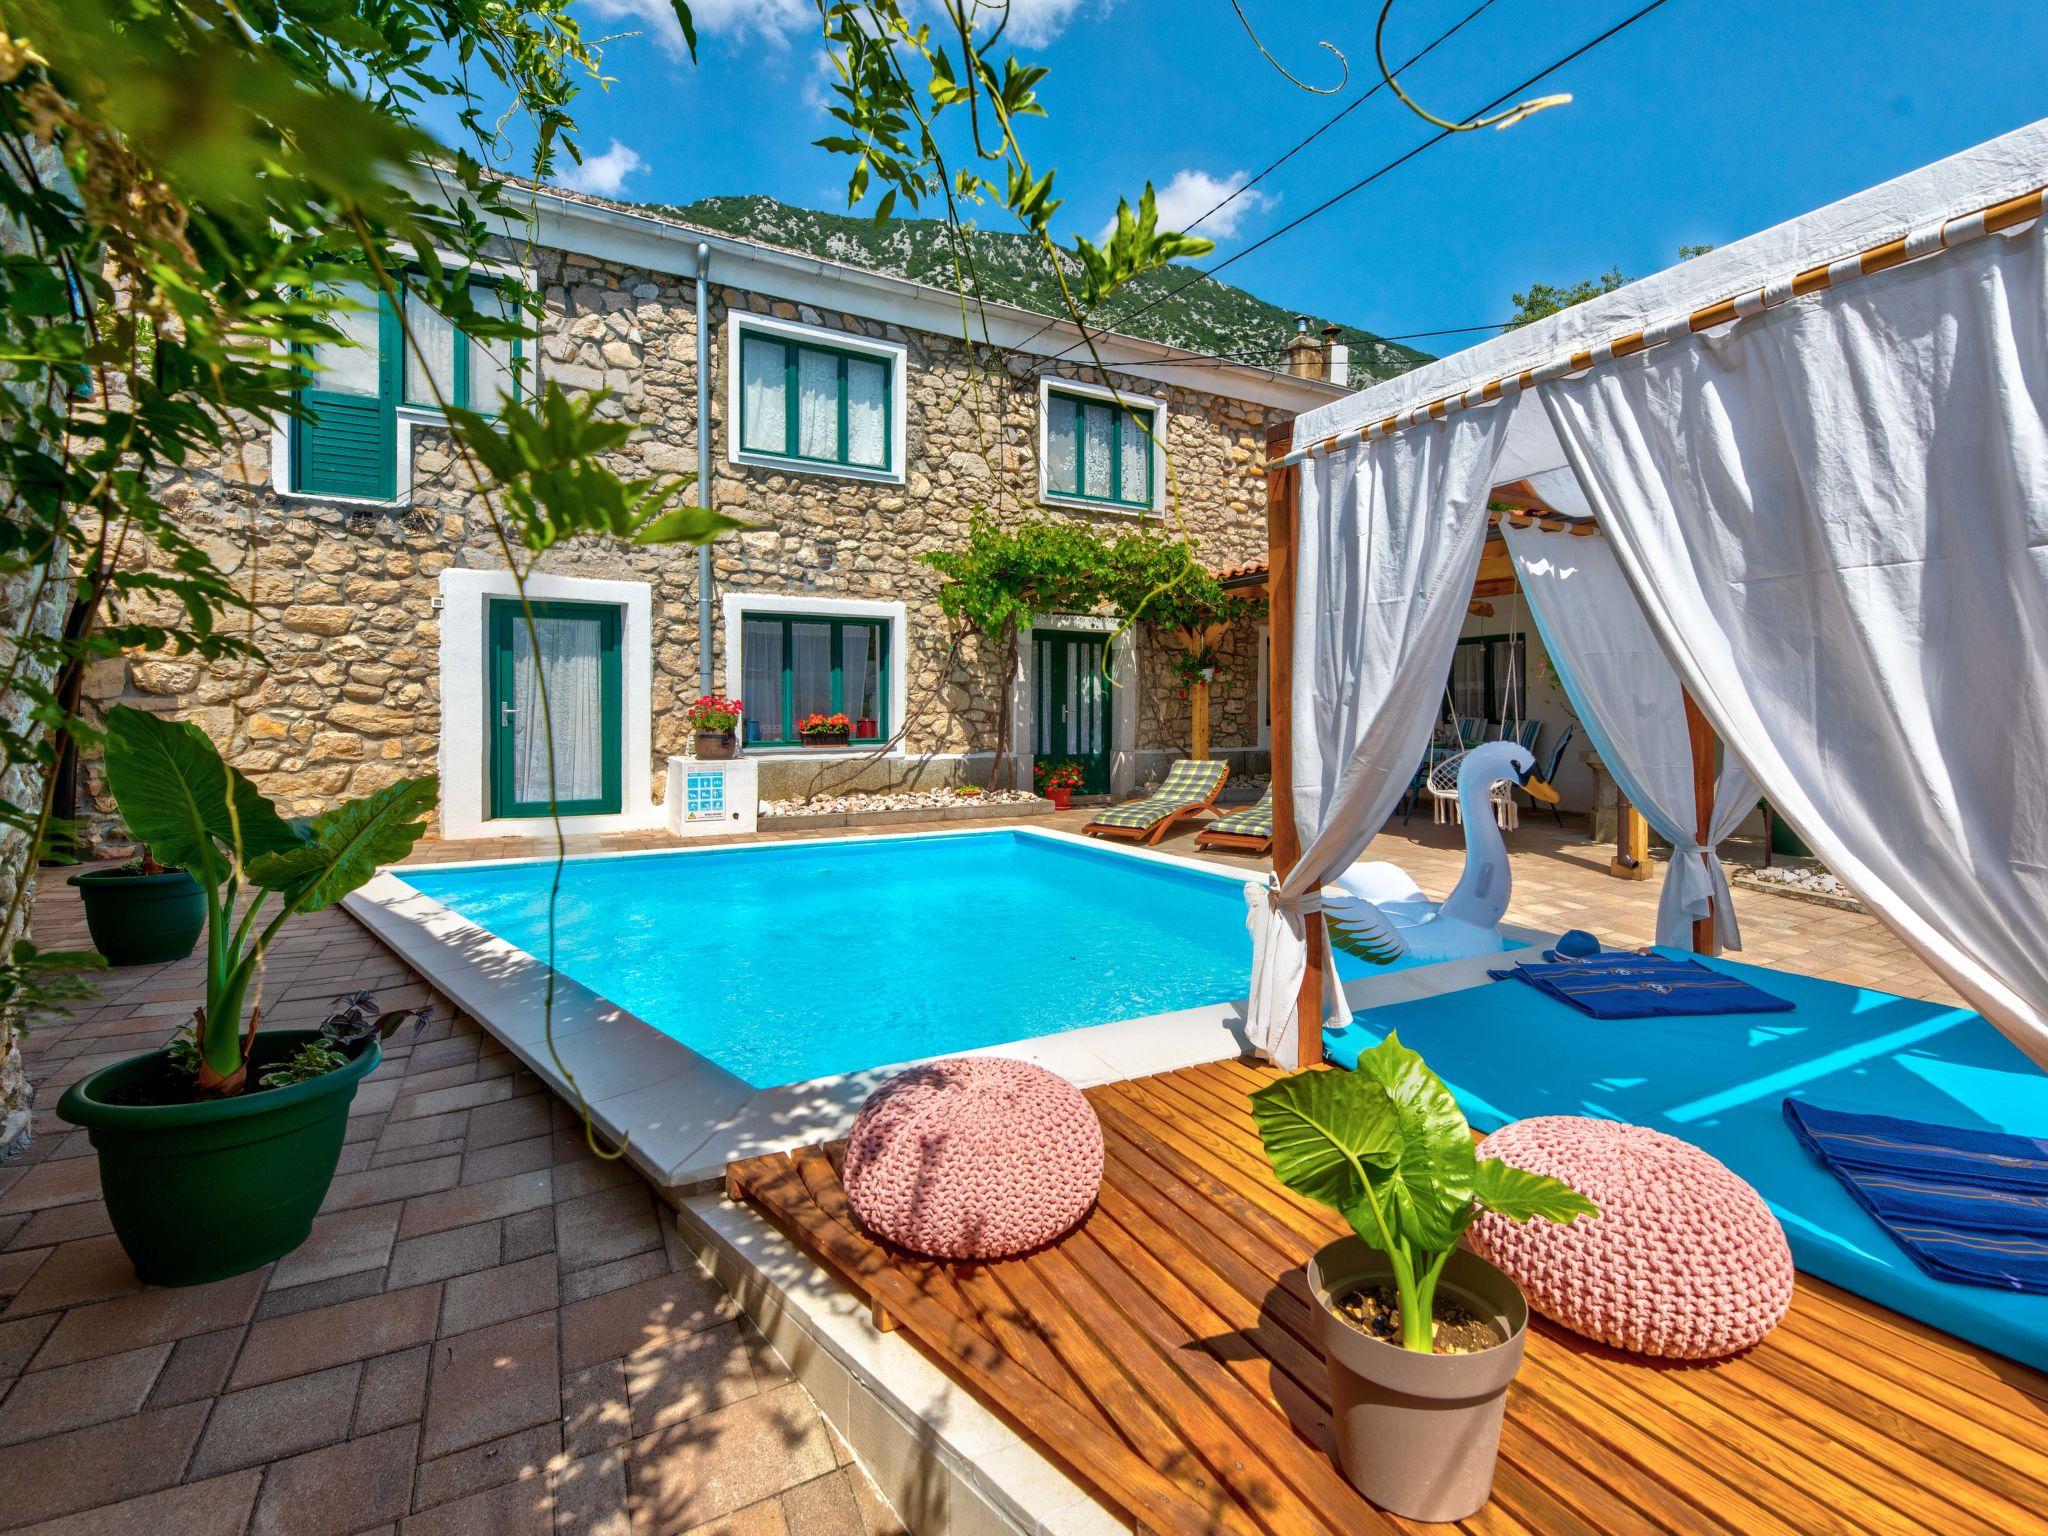 Photo 6 - 3 bedroom House in Vinodolska Općina with private pool and sea view